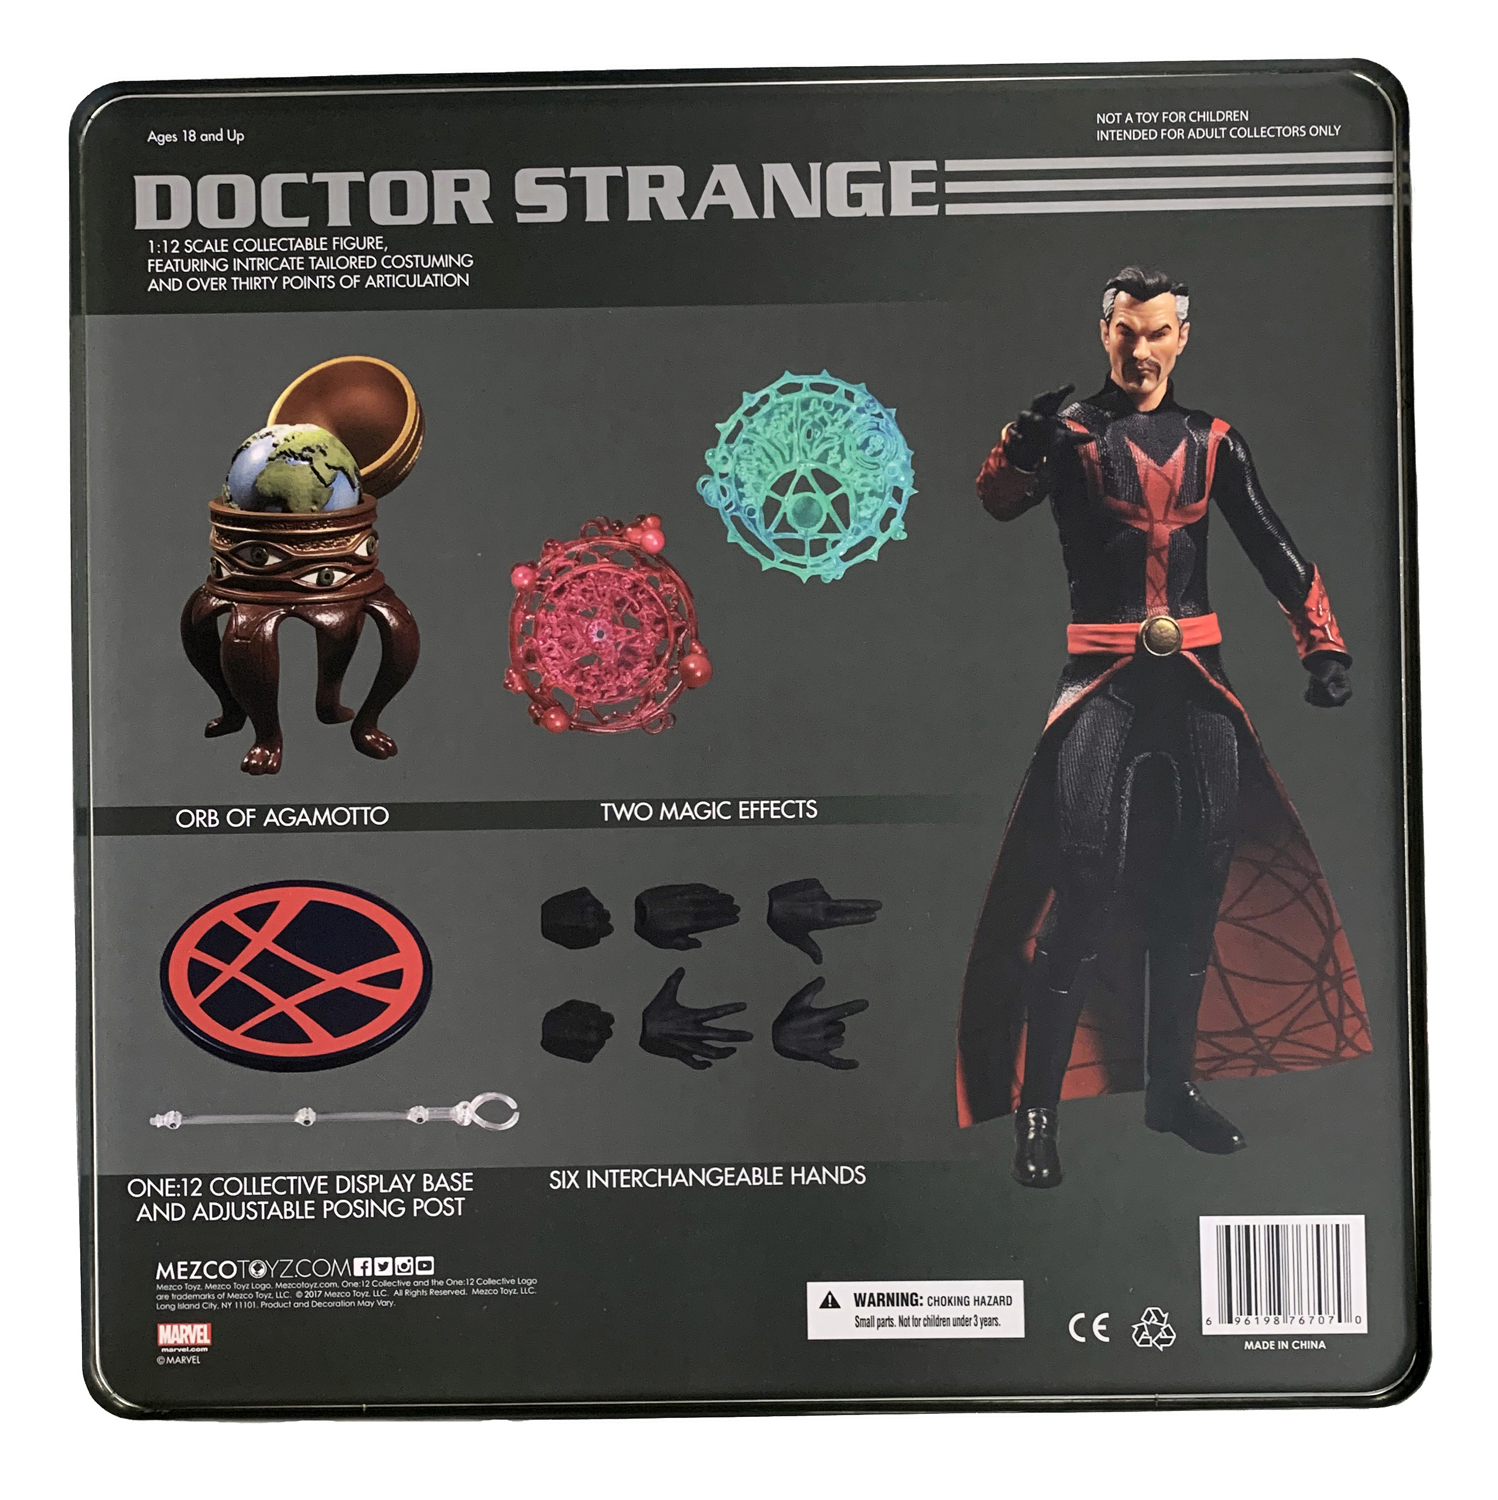 12 Collective Action Figure Marvel Doctor Strange Defenders Version Mezco Toys One